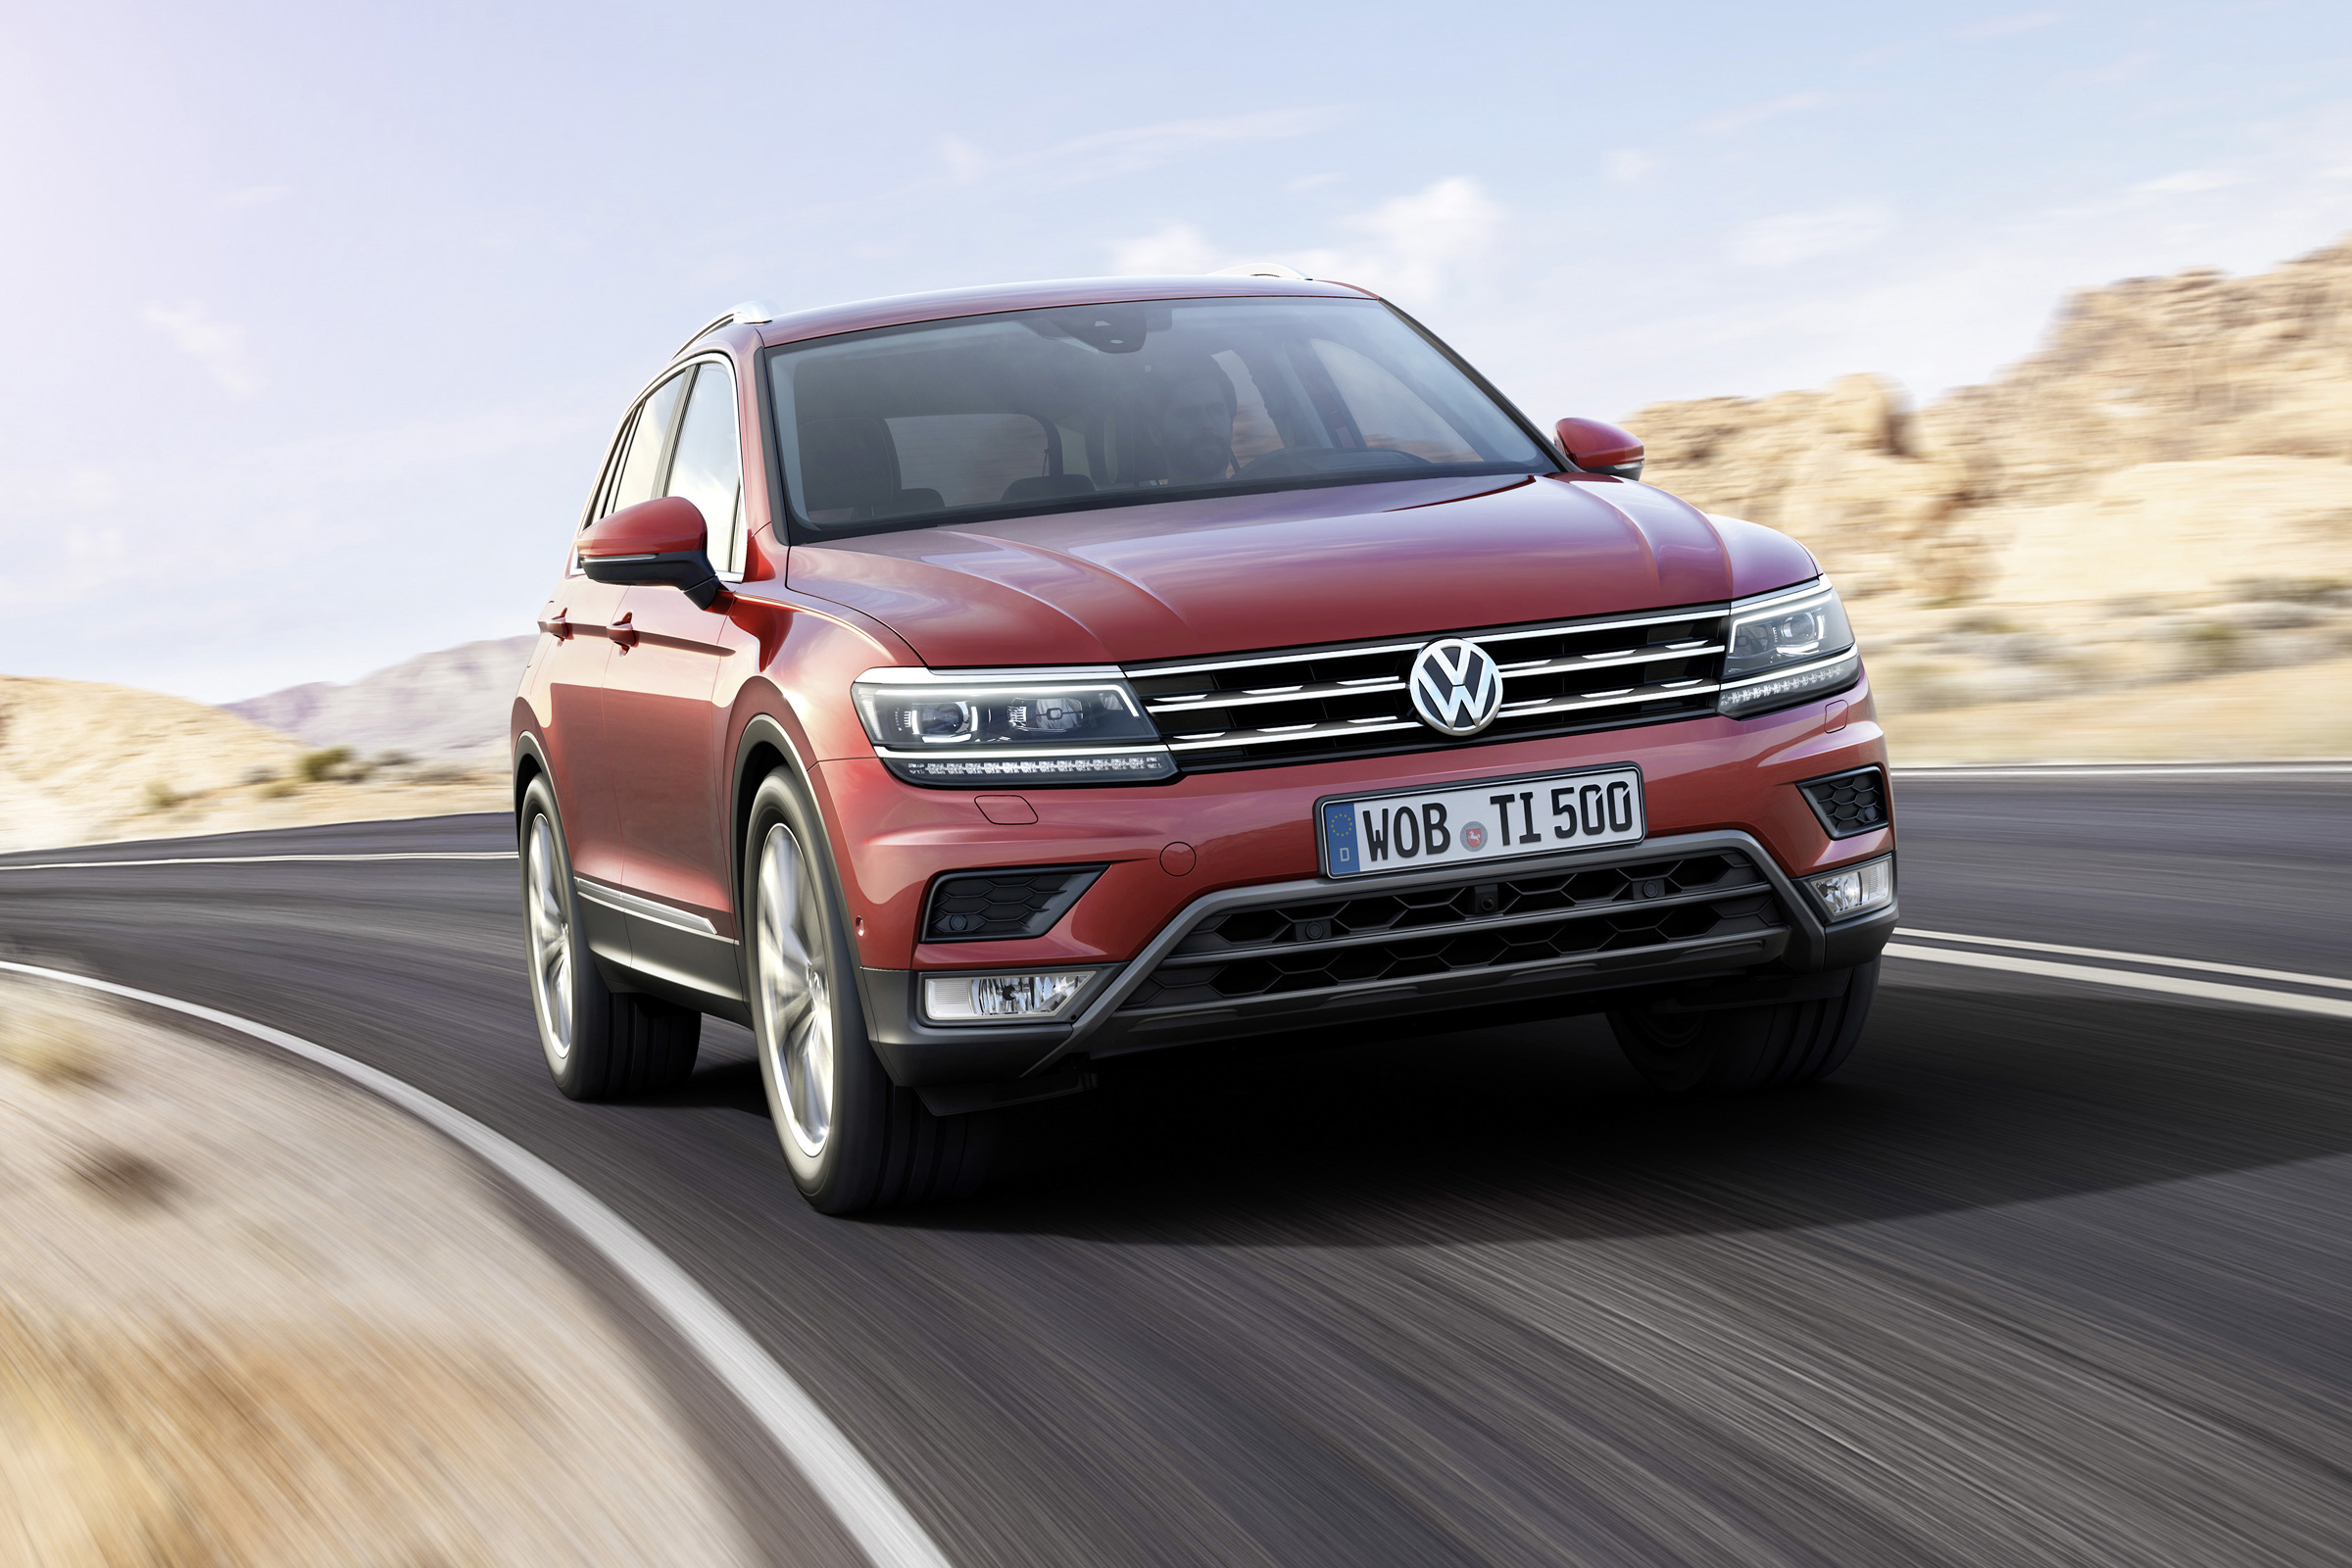 New Volkswagen Tiguan SUV prices & release date Carbuyer